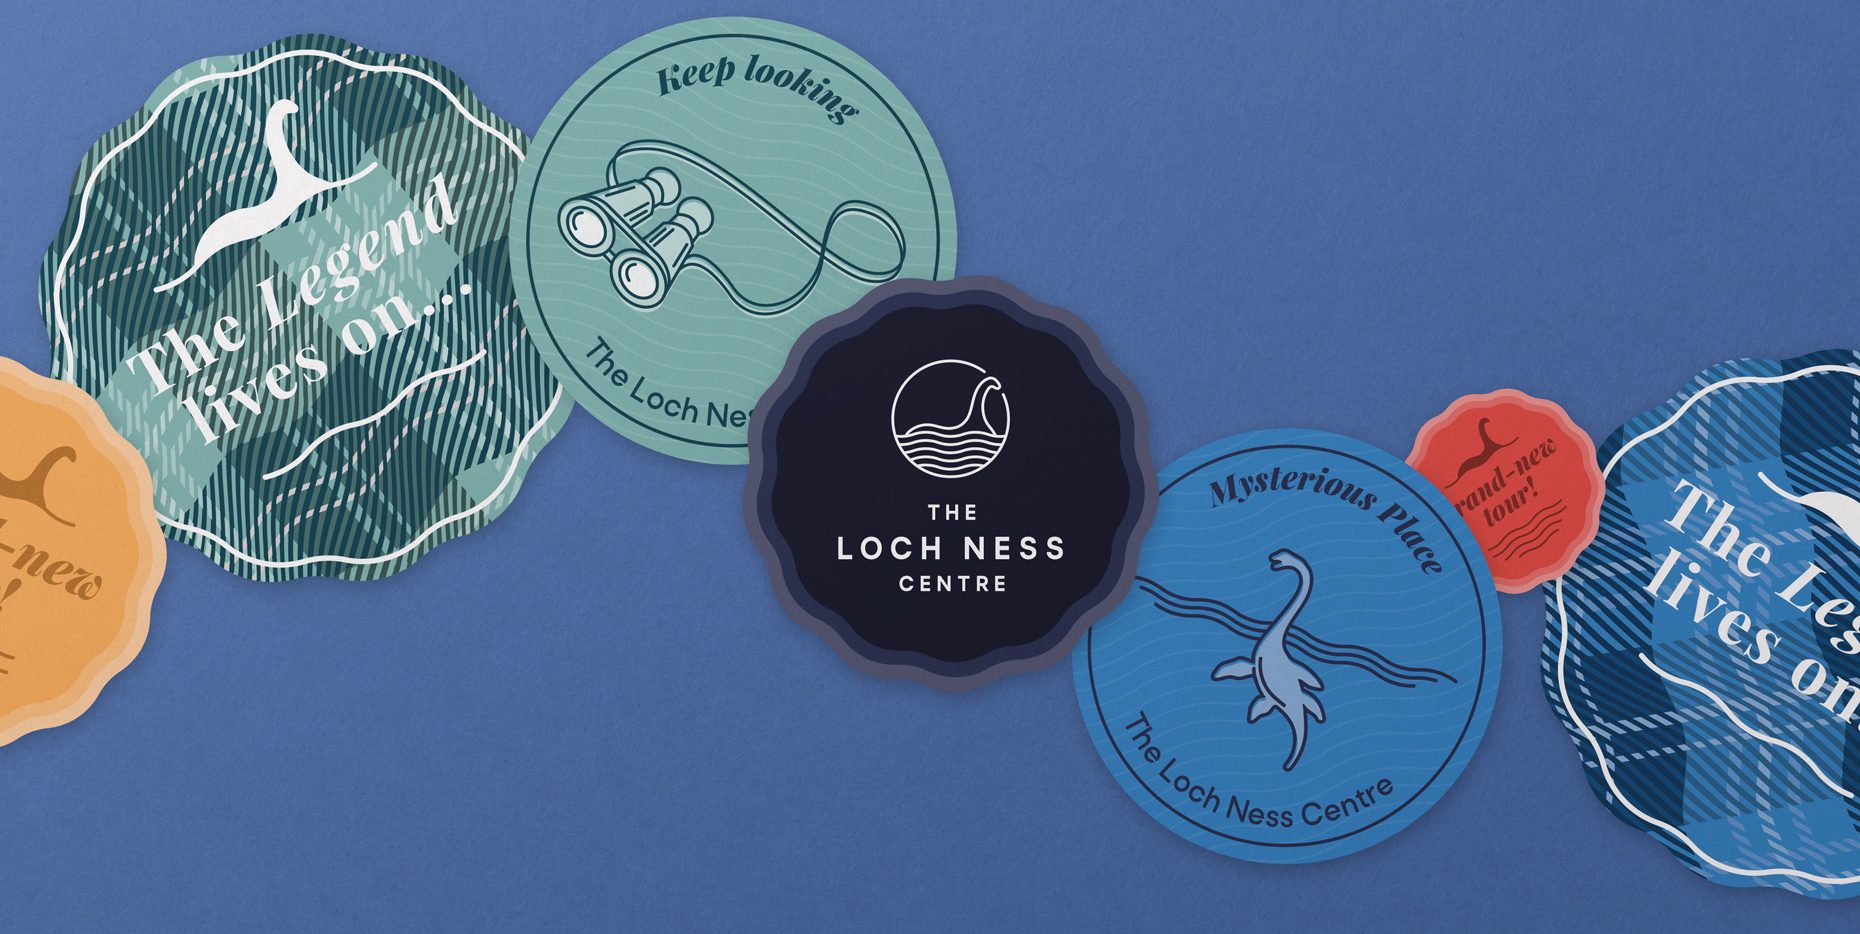 The Loch Ness centre rebrand